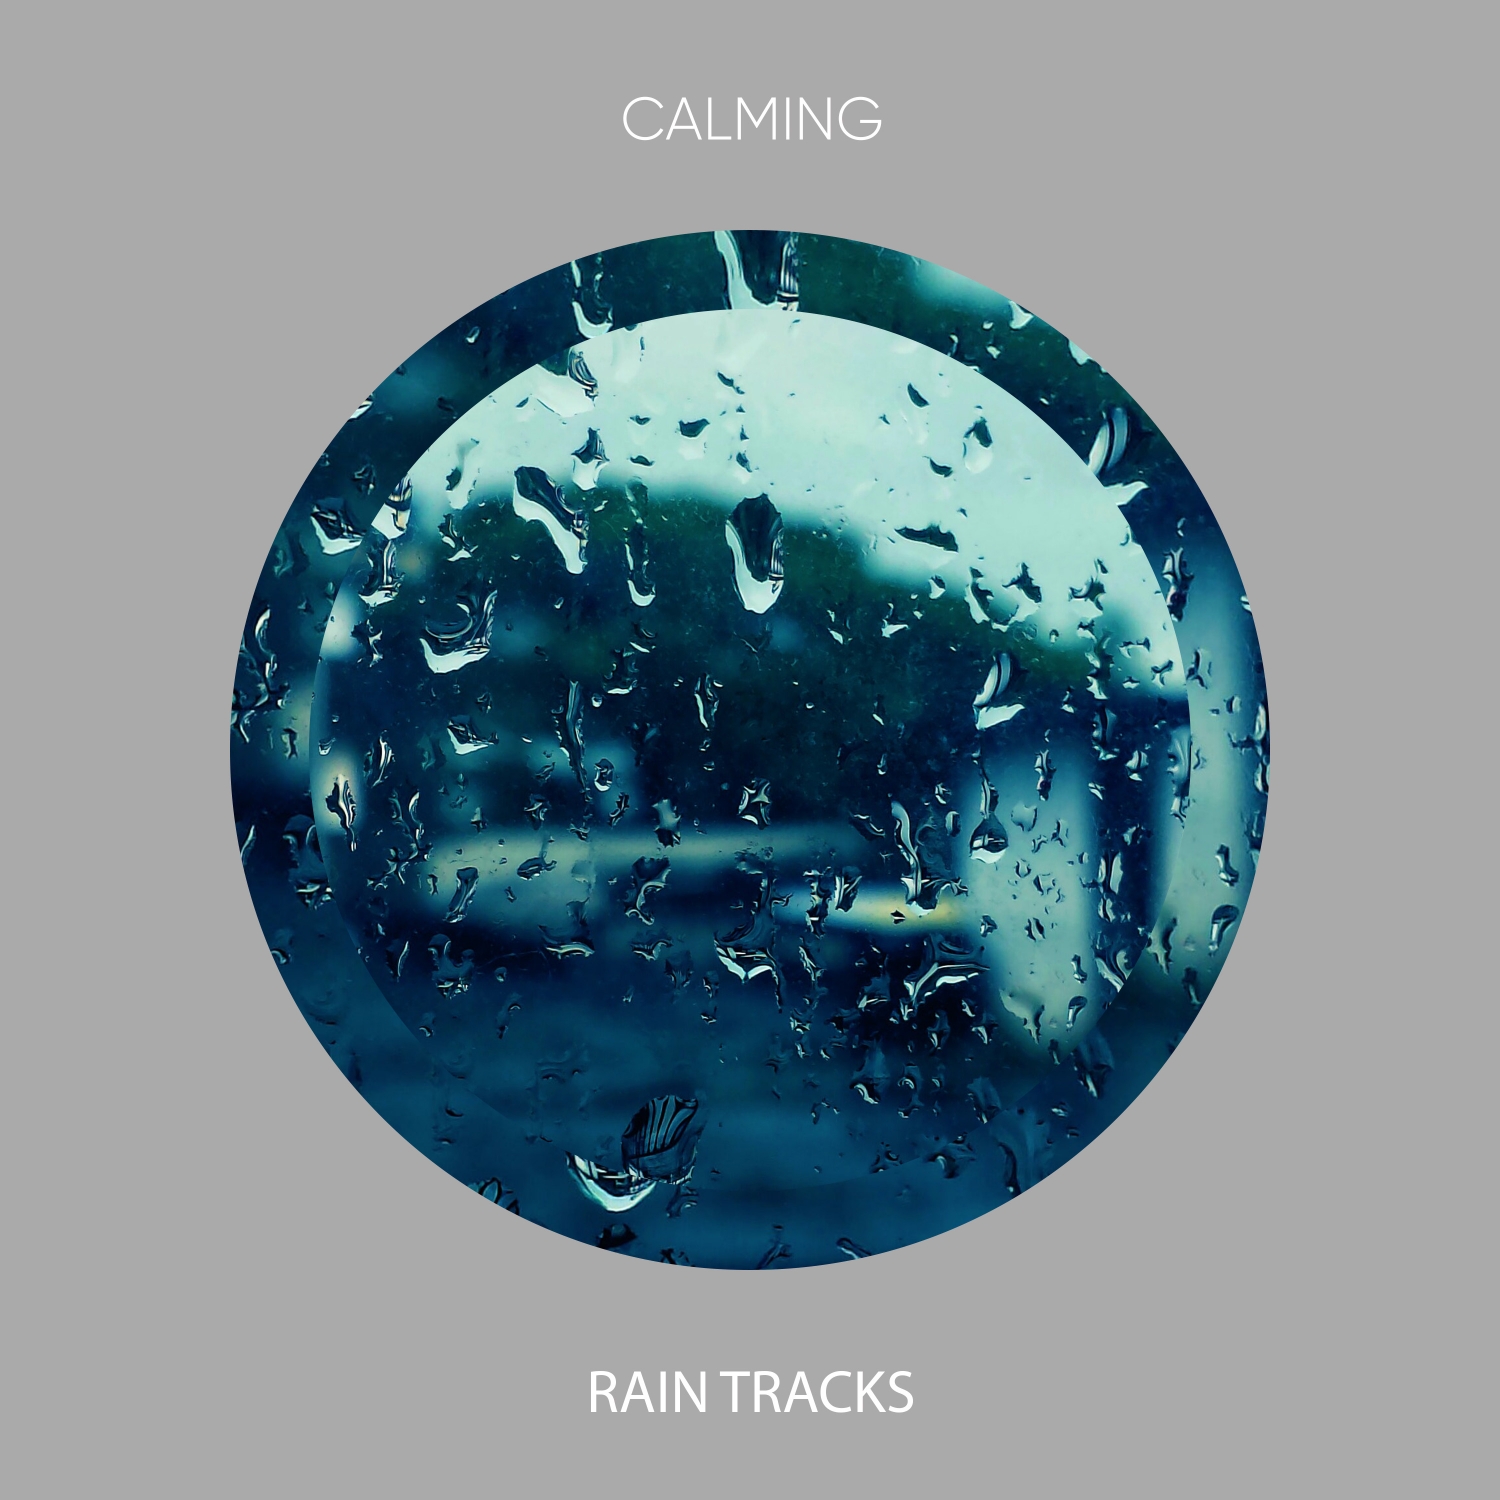 11 Calming Rain Tracks to Sleep Eight Hours